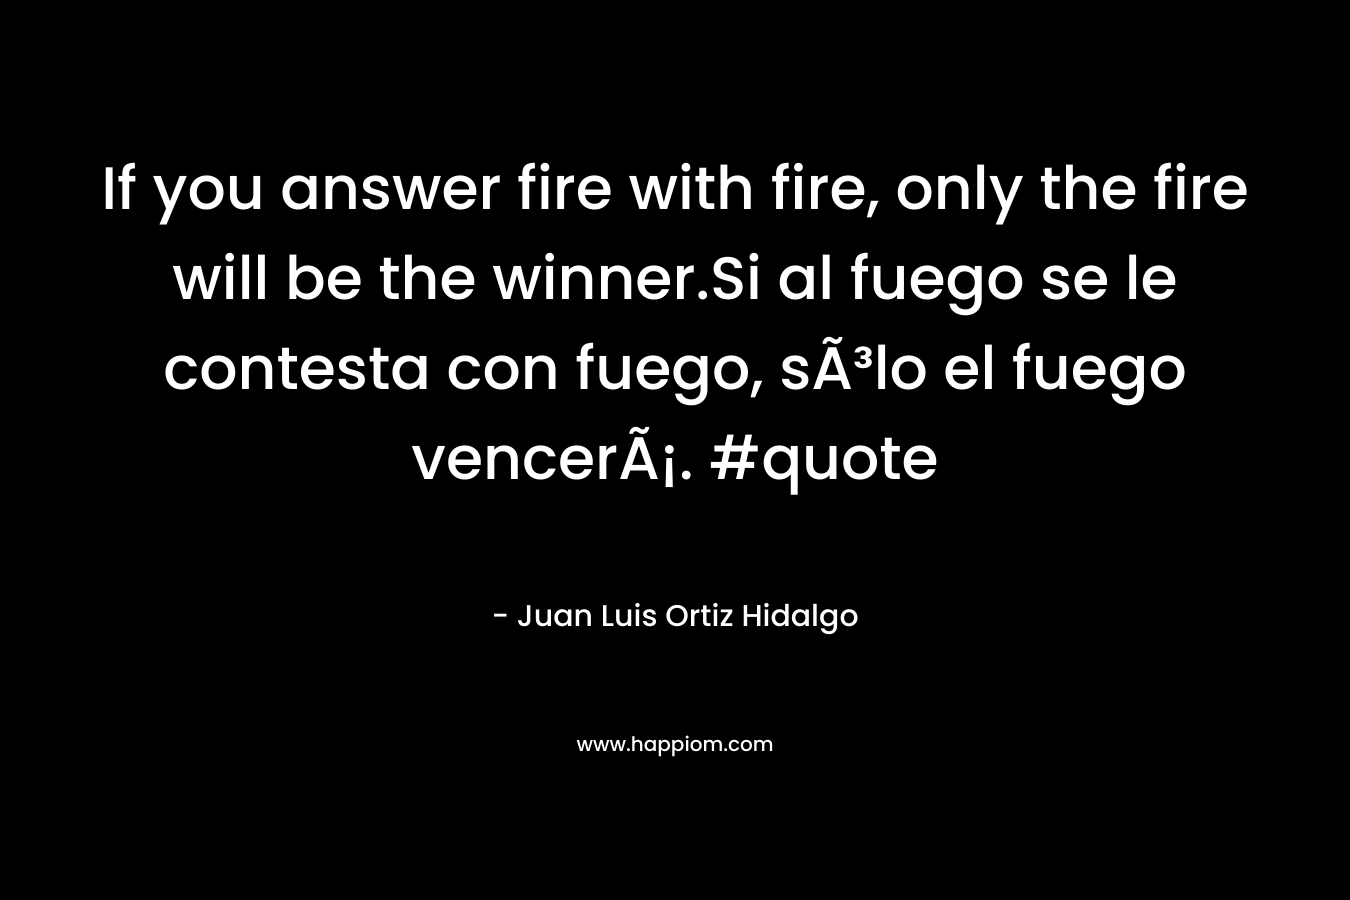 If you answer fire with fire, only the fire will be the winner.Si al fuego se le contesta con fuego, sÃ³lo el fuego vencerÃ¡. #quote